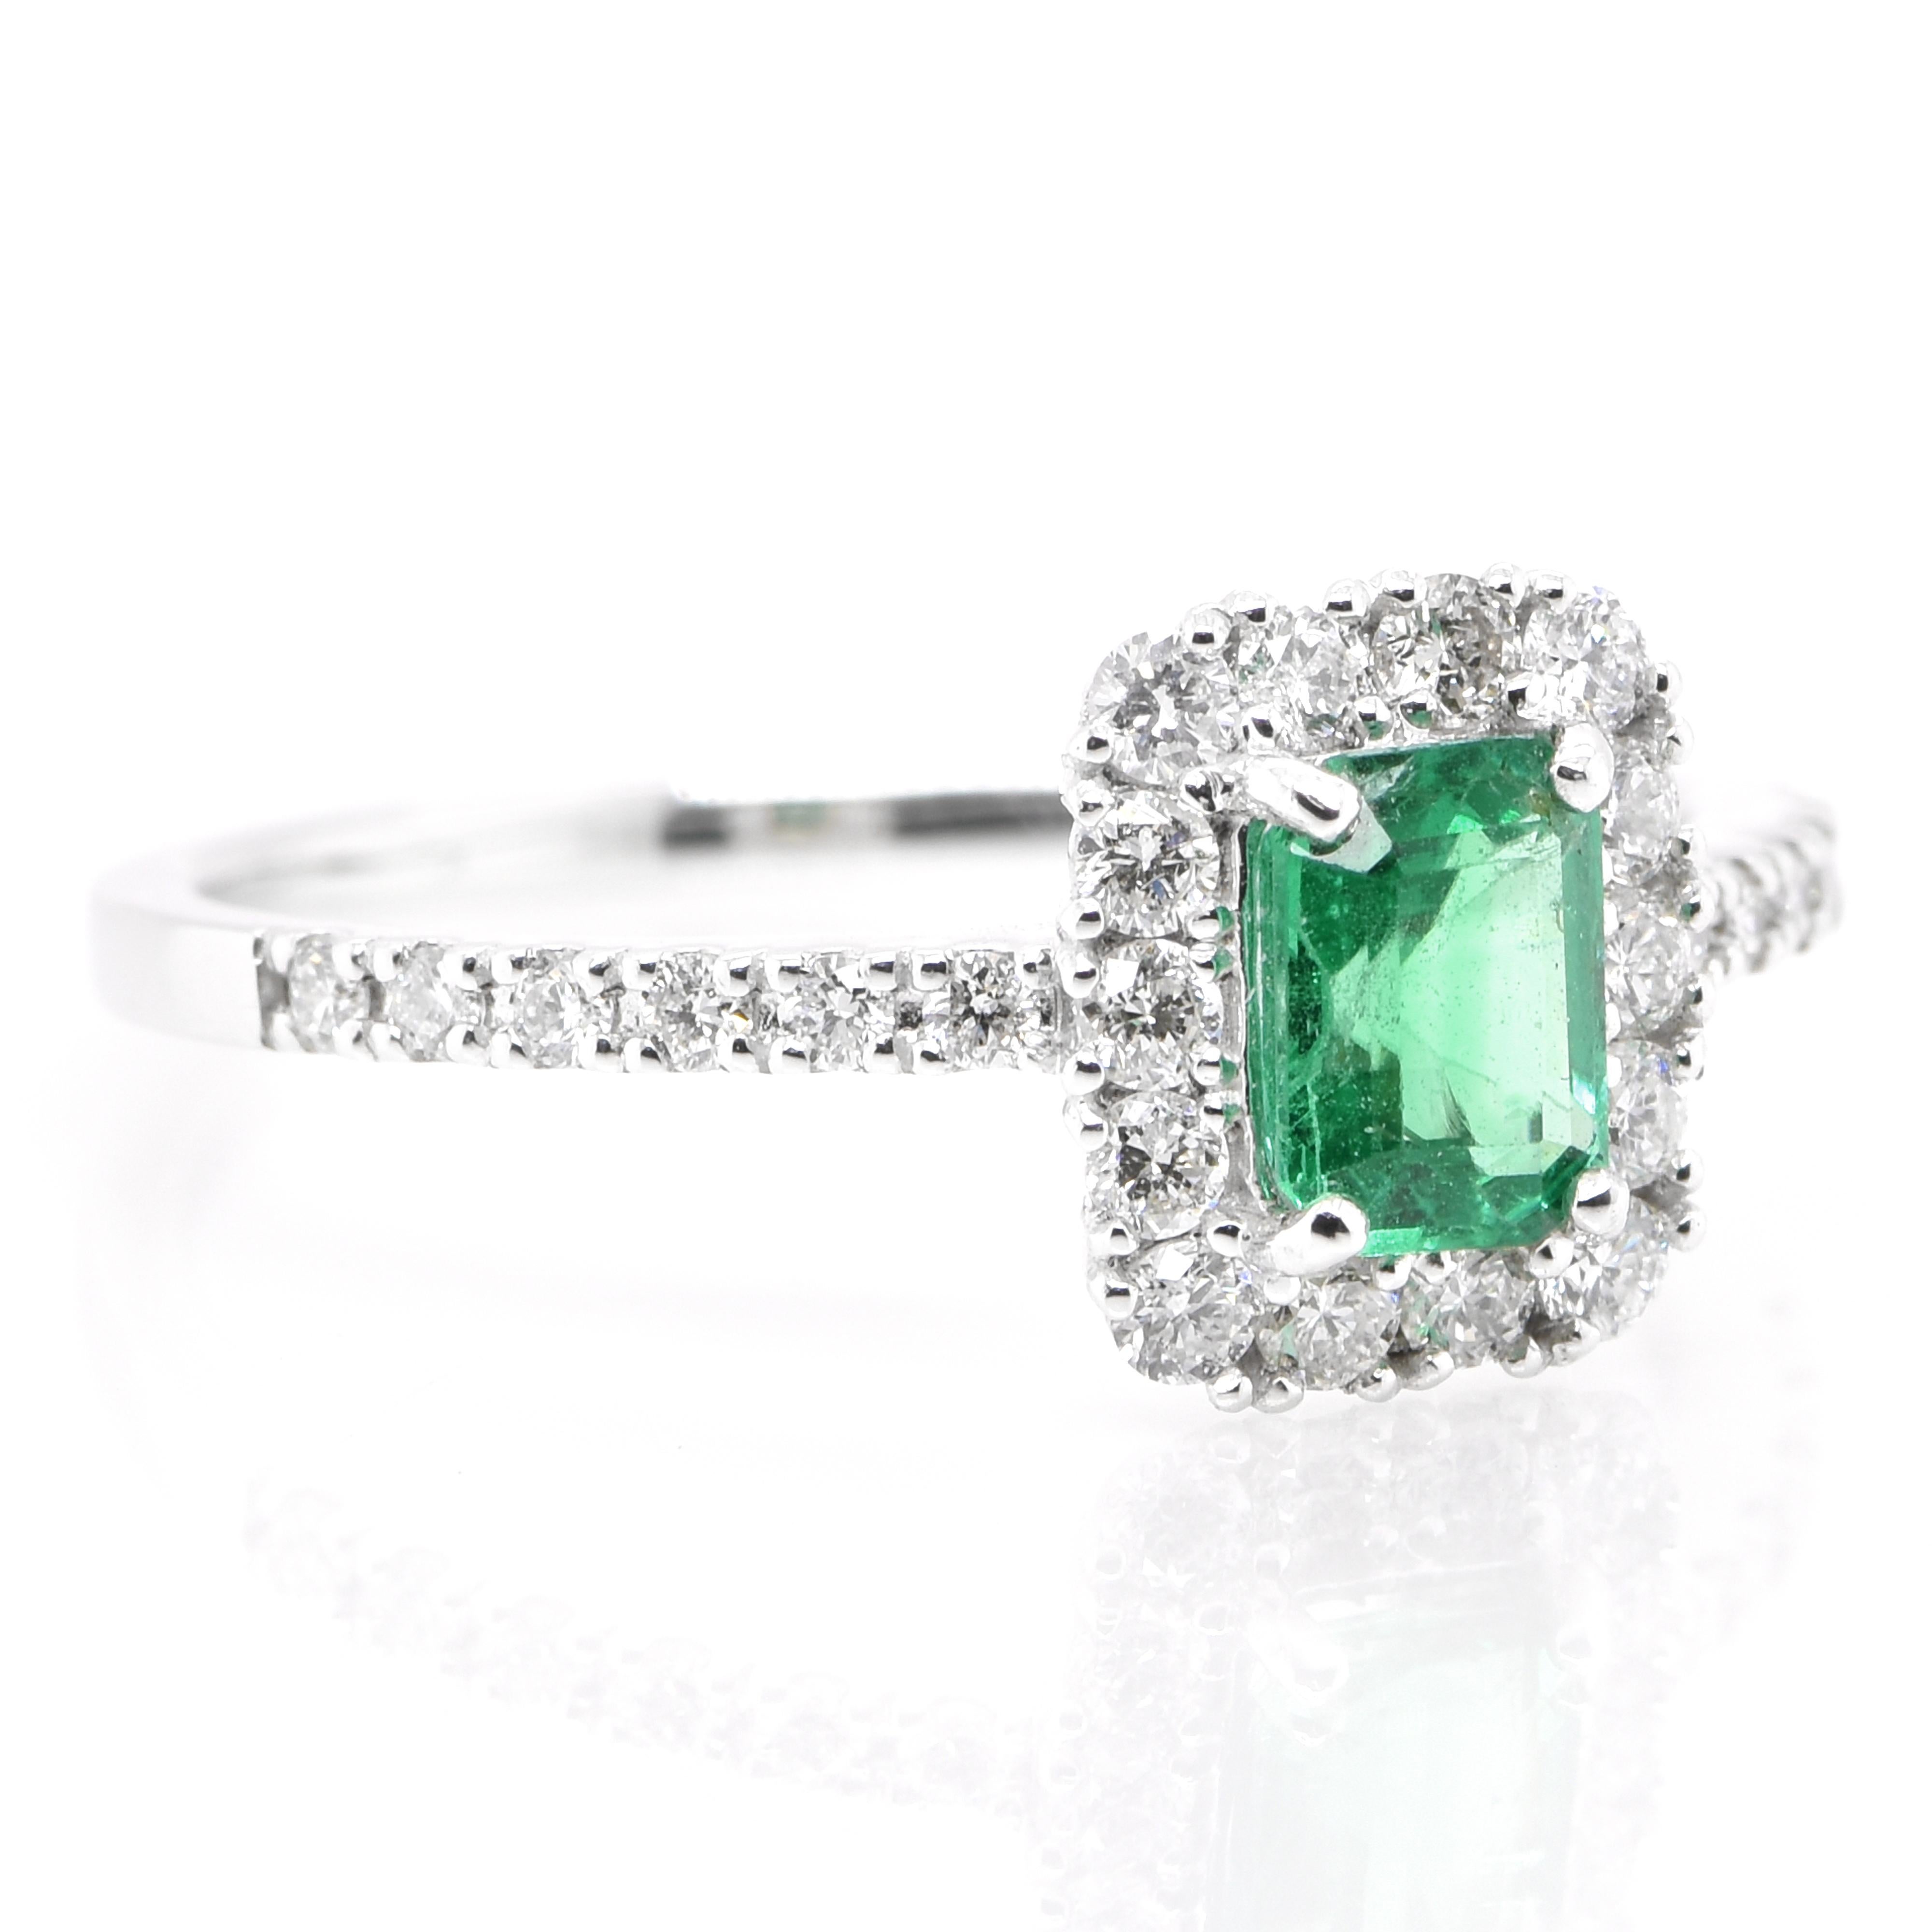 Emerald Cut 0.47 Carat Natural Emerald and Diamond Engagement Ring Set in Platinum